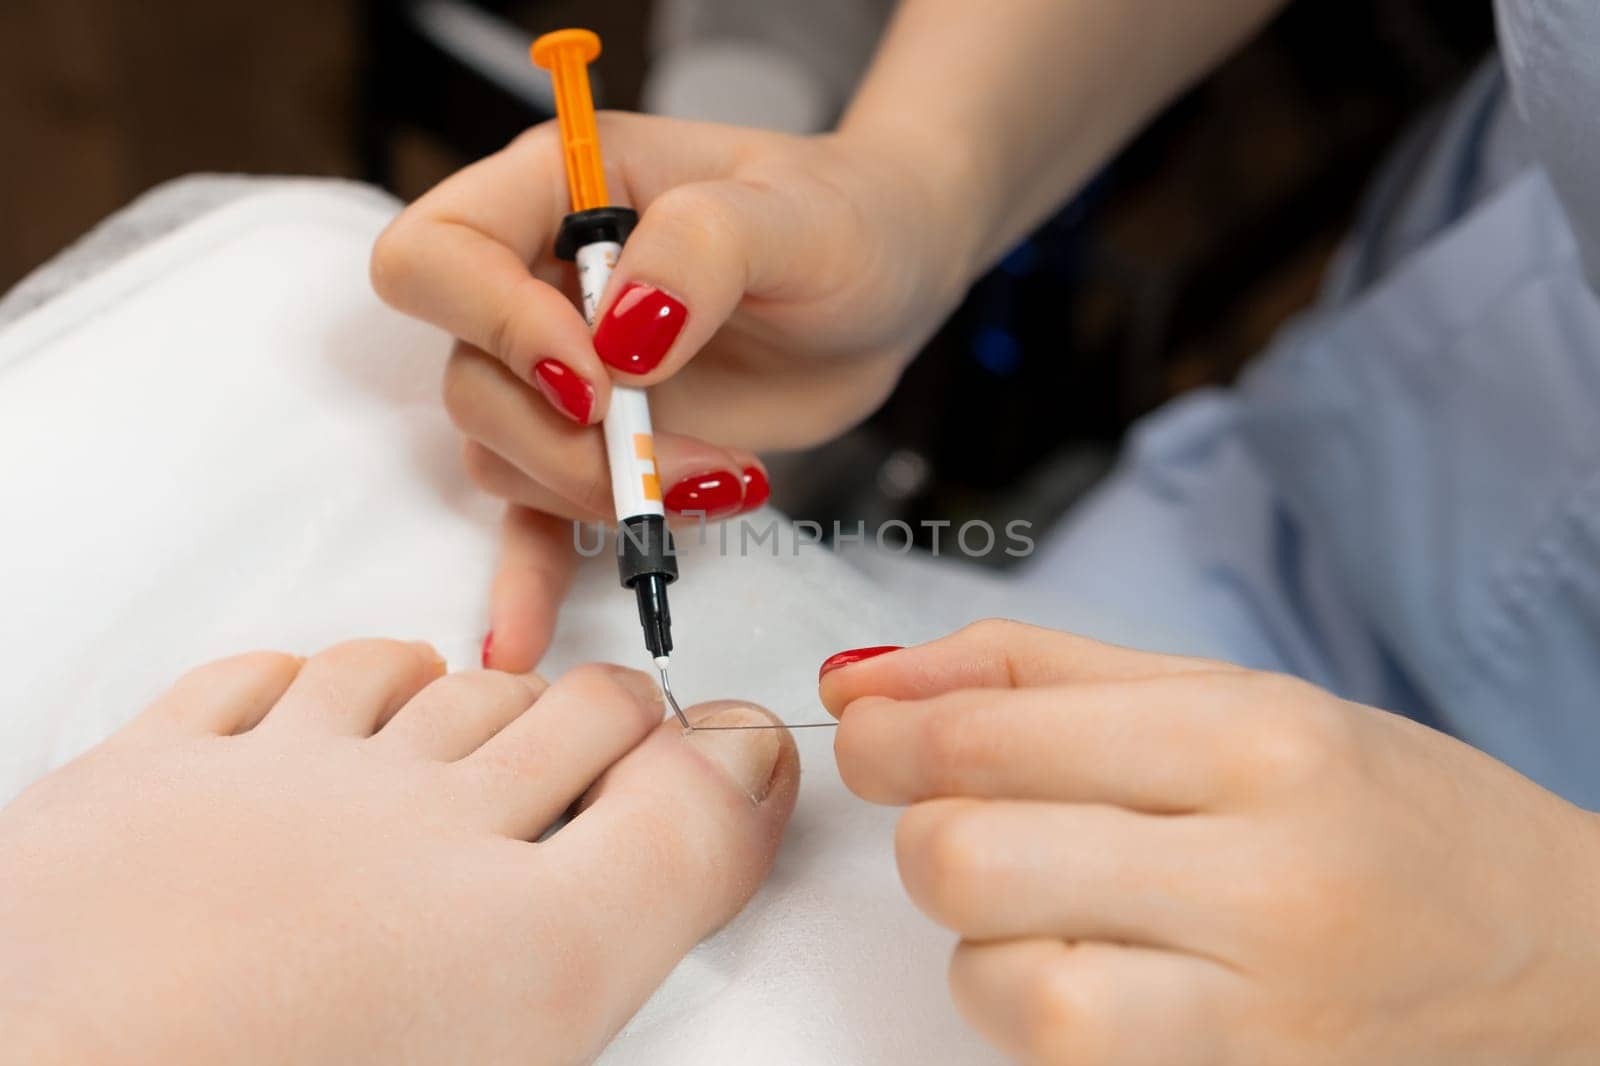 Podologist sets titanium toenail braces for woman by vladimka